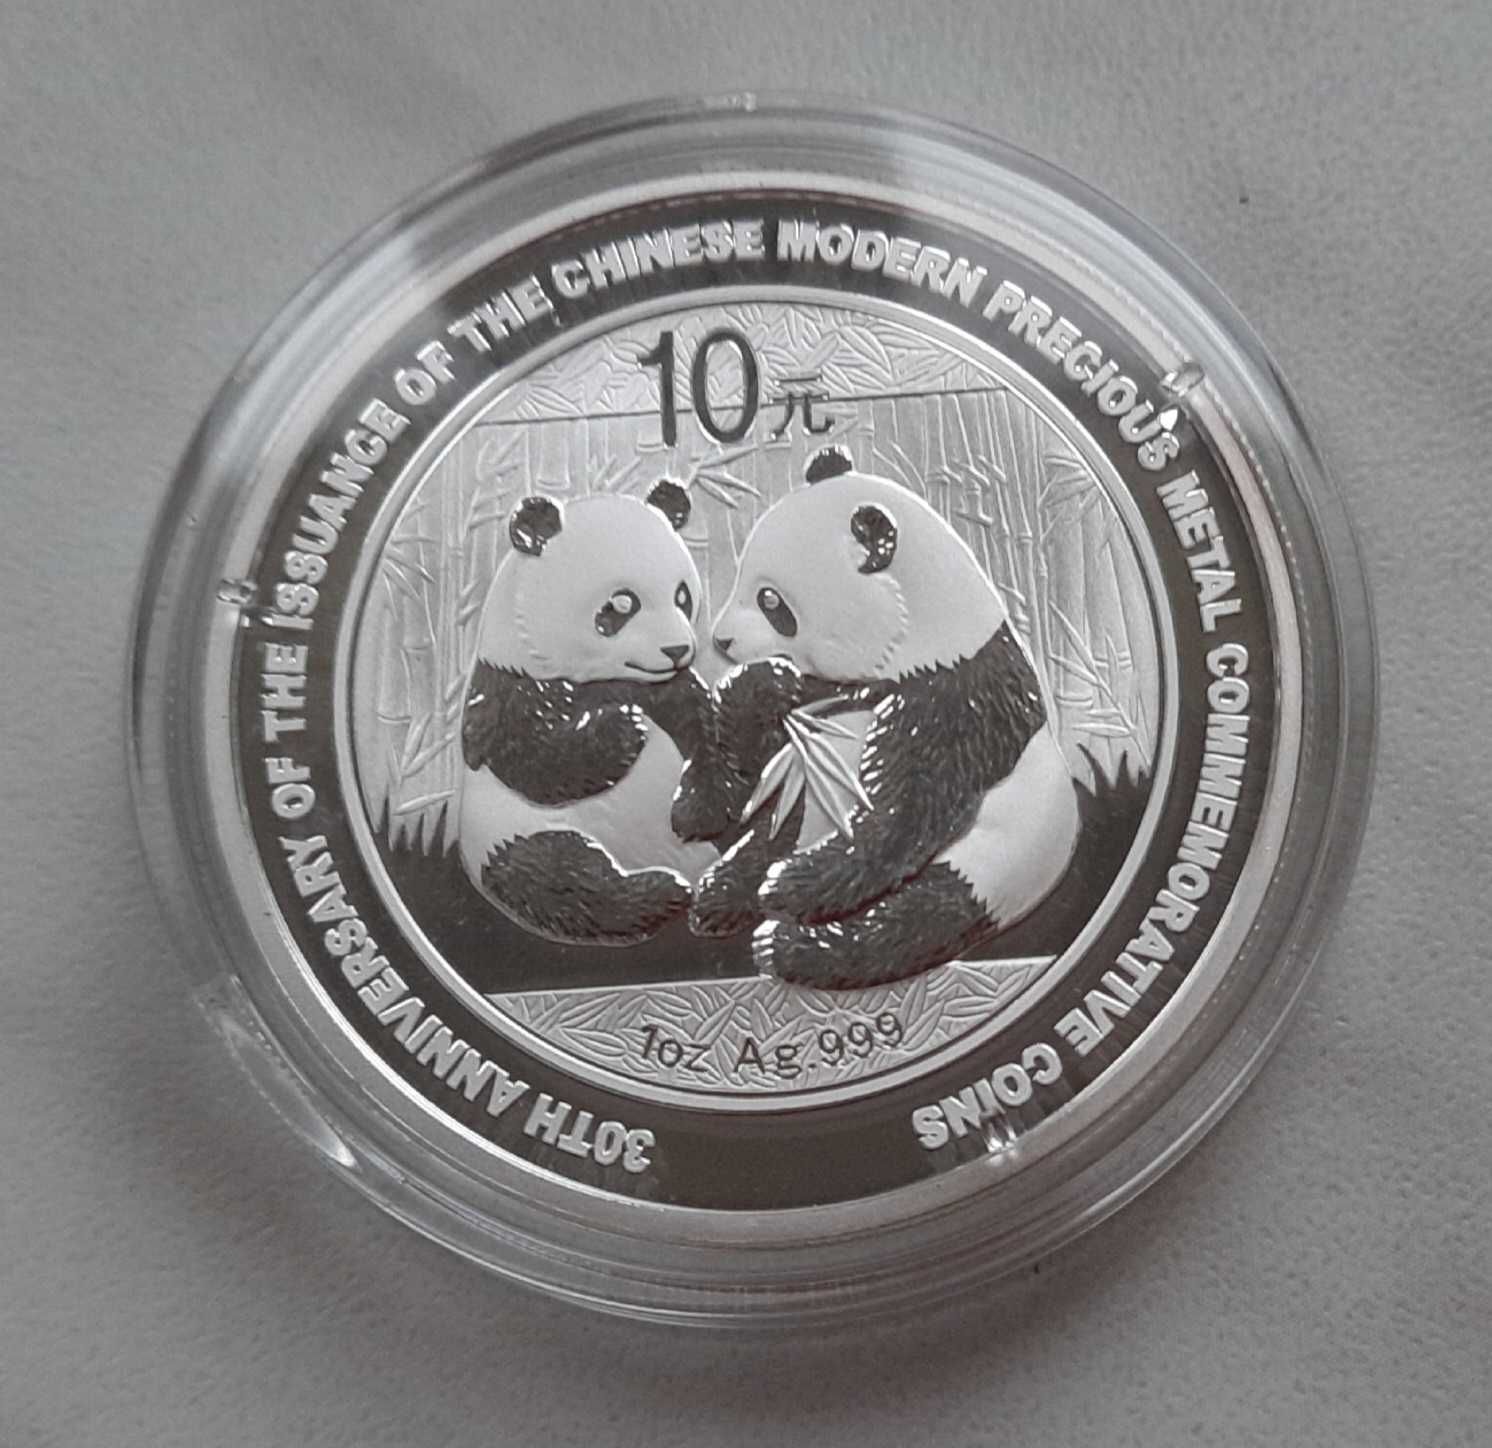 Srebrna chińska moneta z 2009 roku - 10 yuan - 2 pandy